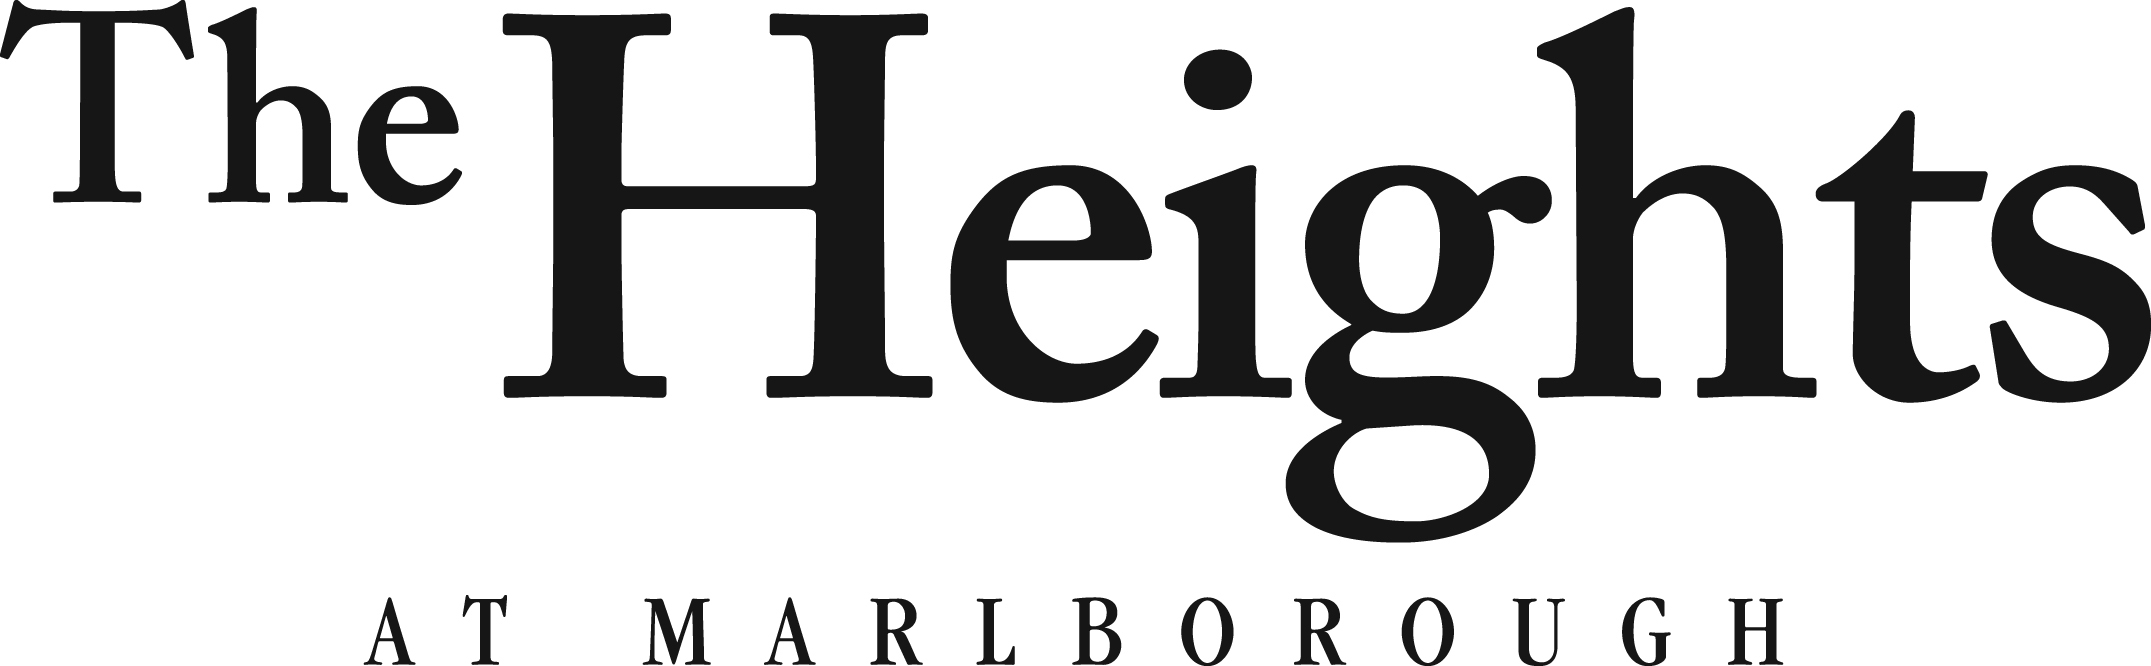 Heights at Marlborough Logo